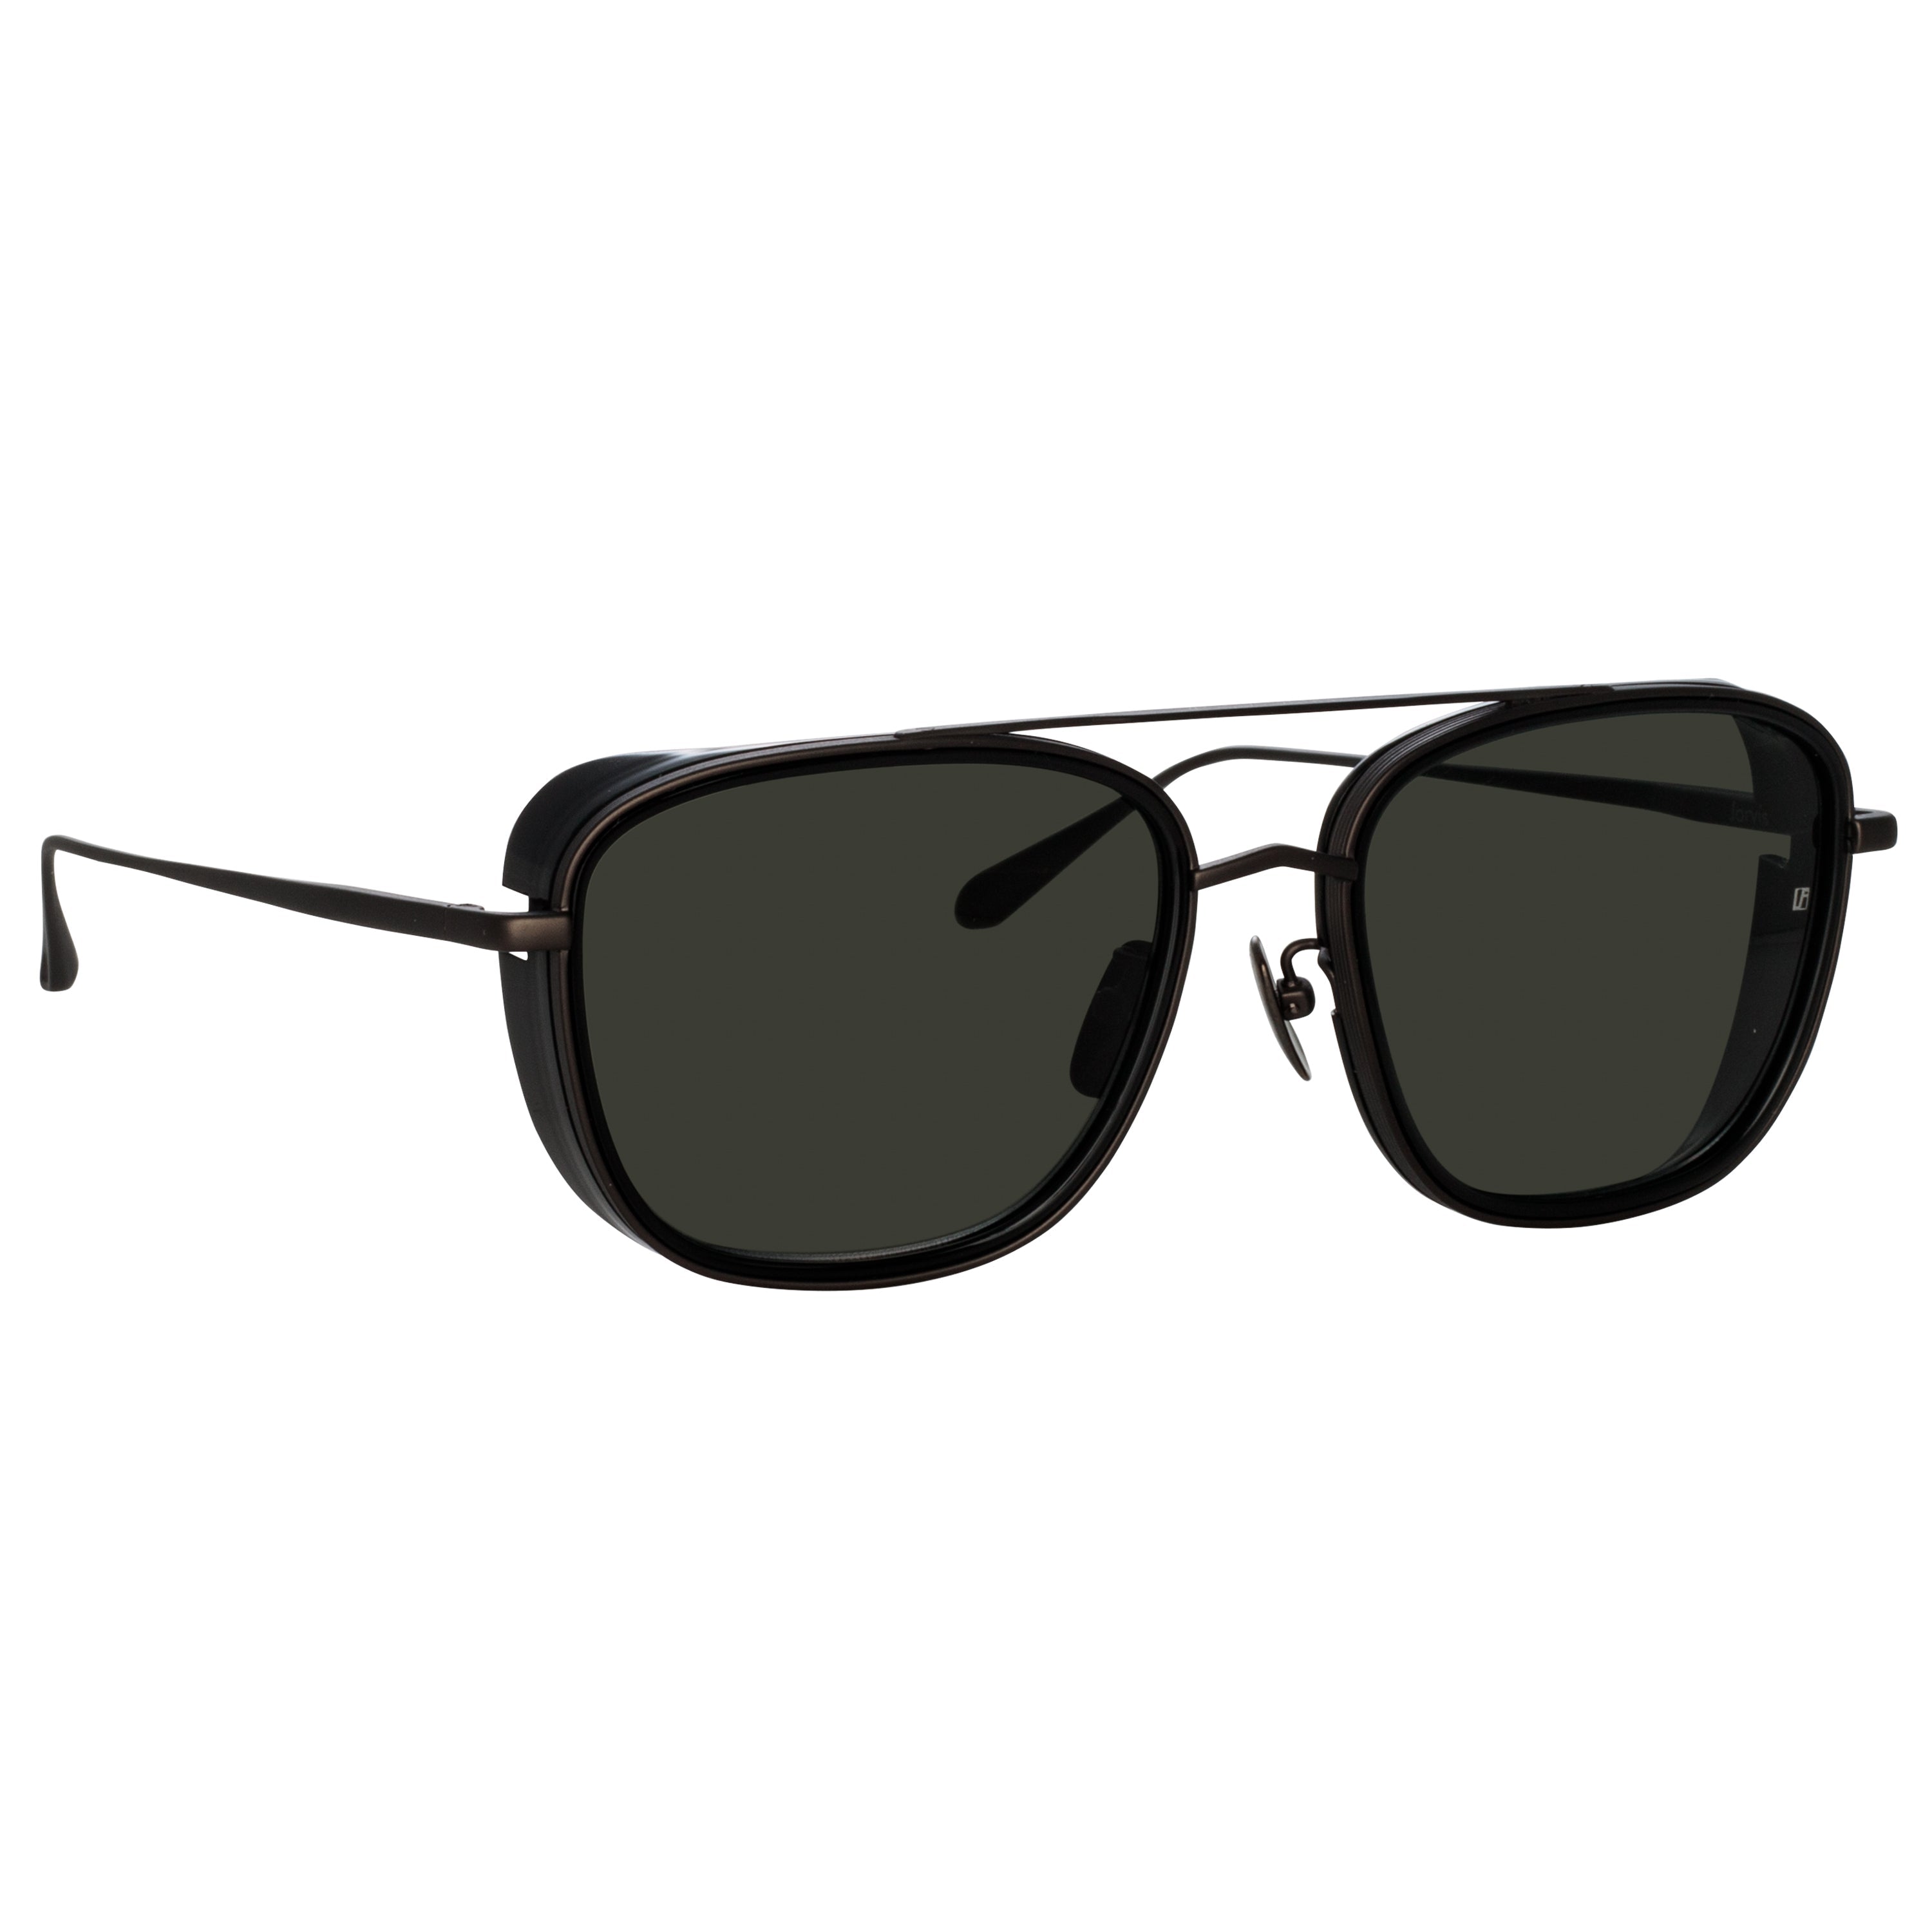 Jarvis Aviator Sunglasses in Black and Nickel